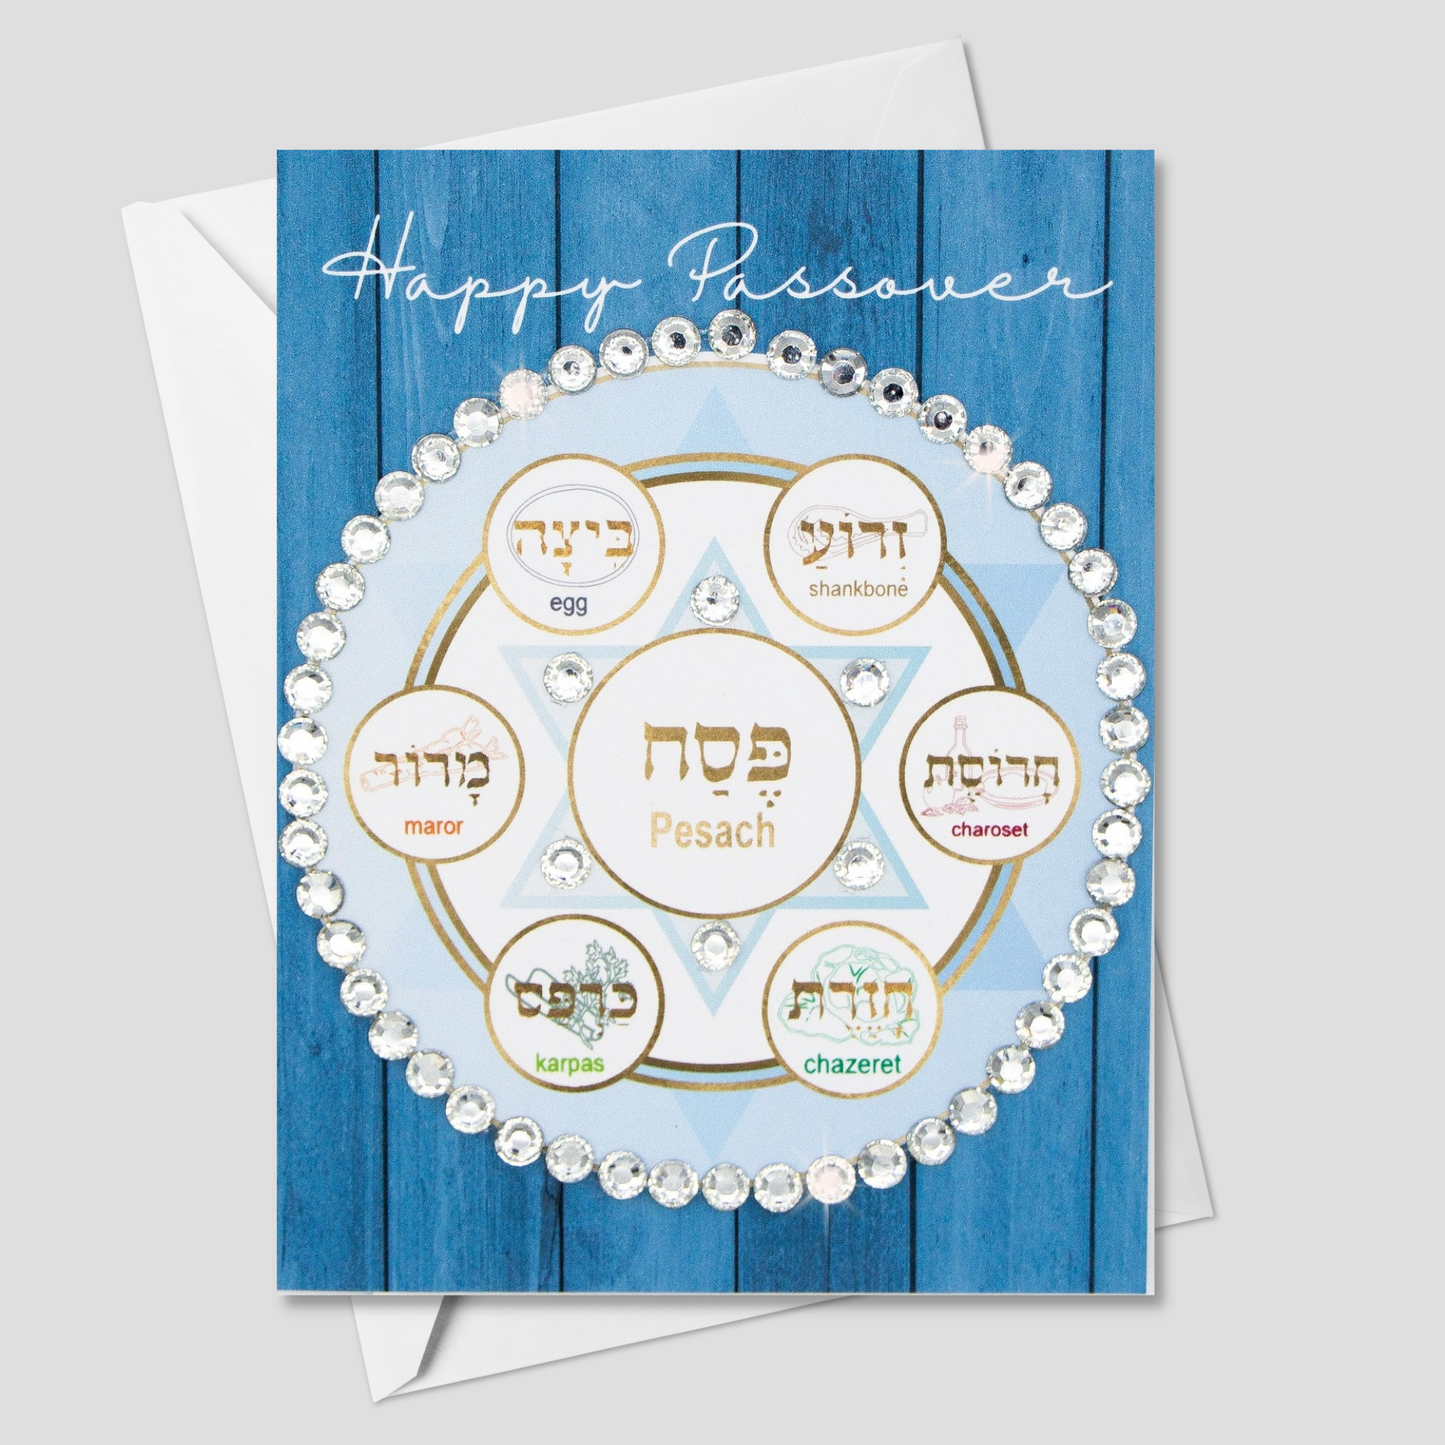 Passover Sedar Plate (Wood Background) Greeting Card